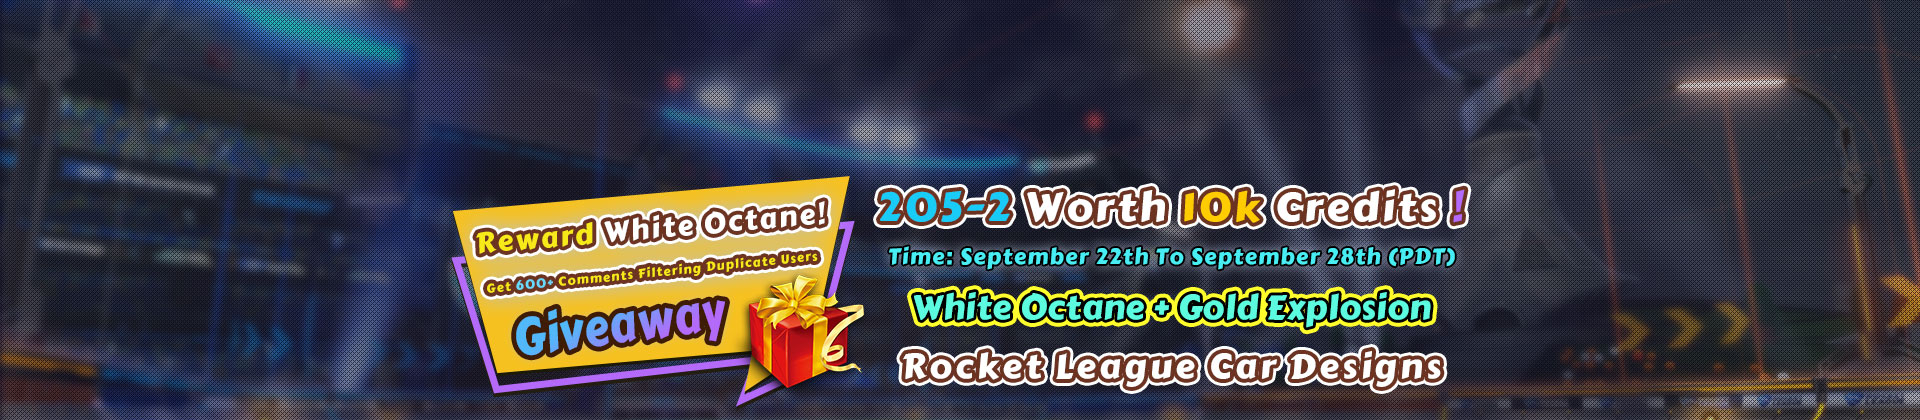 Rocket League Items Giveaway 205-2